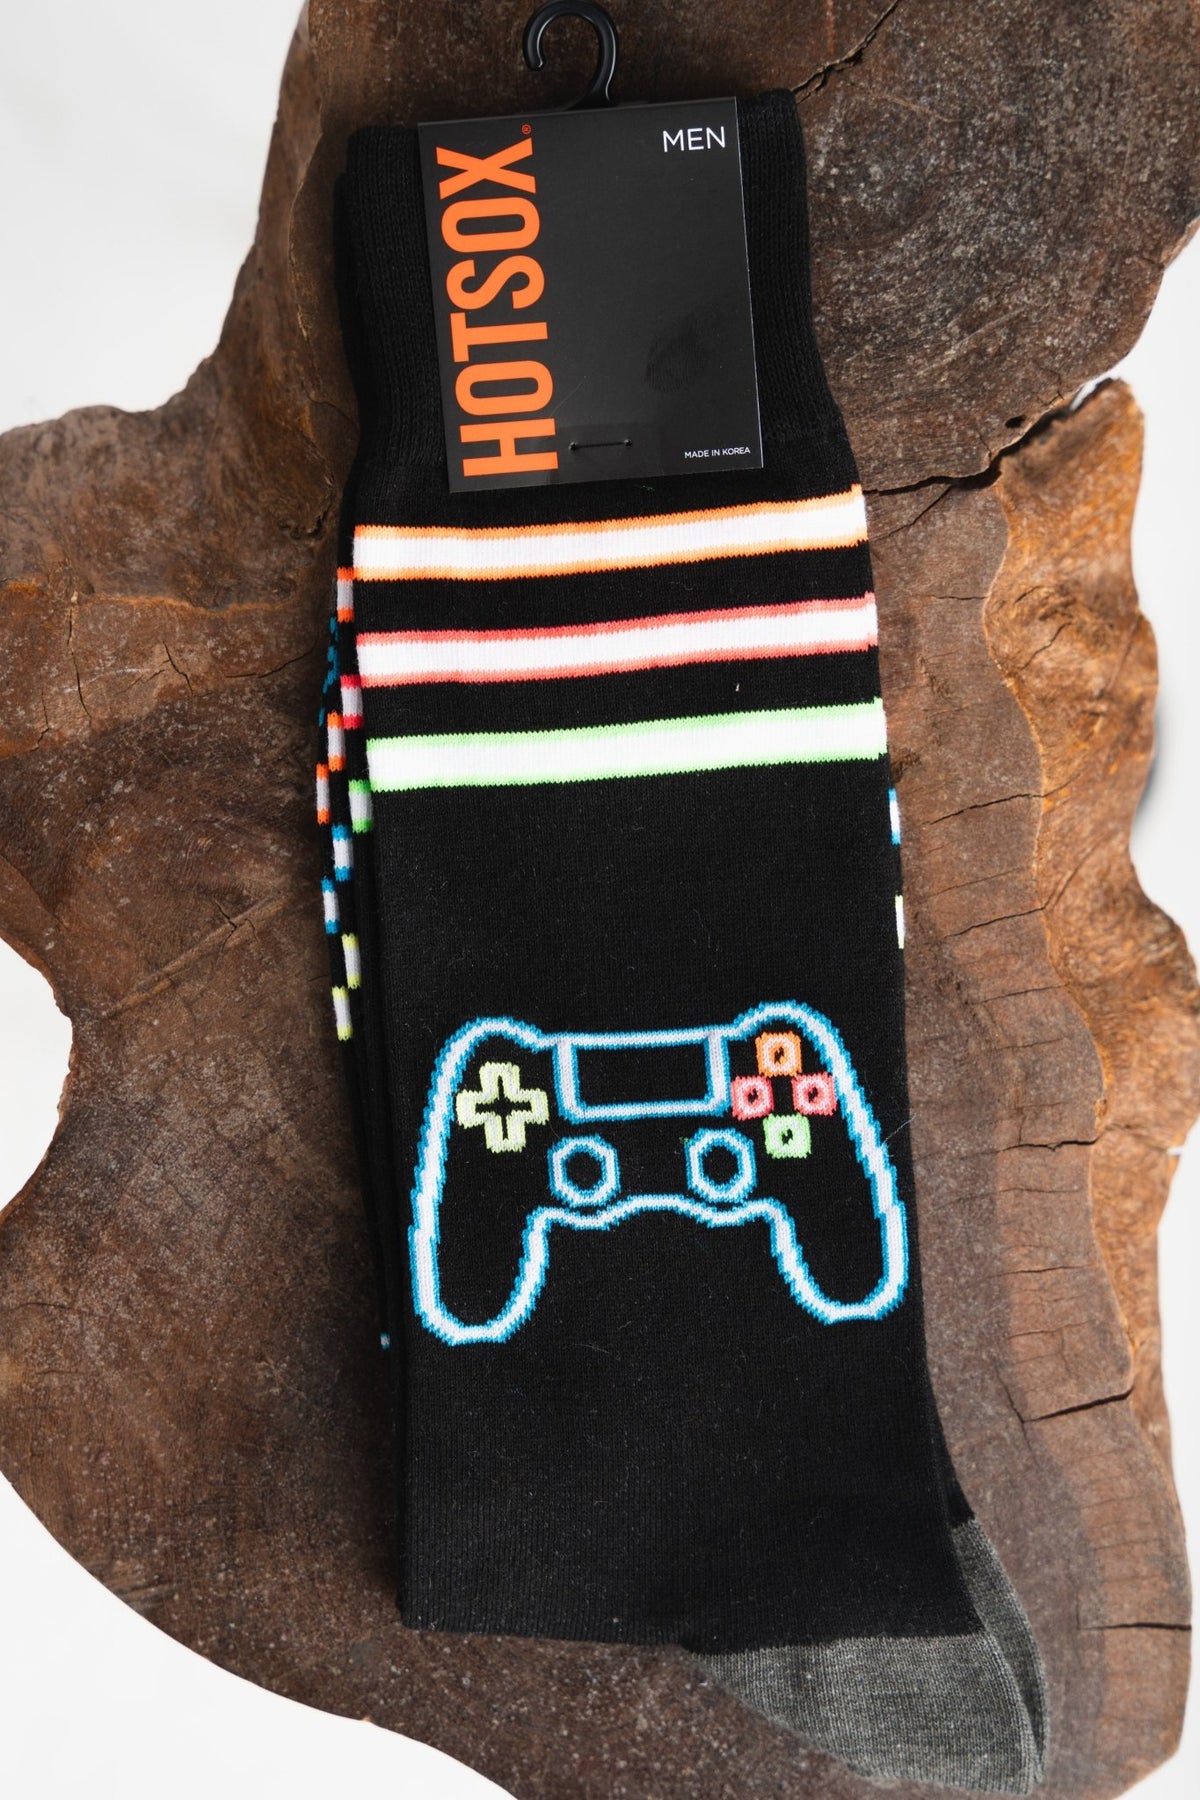 HotSox gamer controller men's socks - Trendy Socks at Lush Fashion Lounge Boutique in Oklahoma City